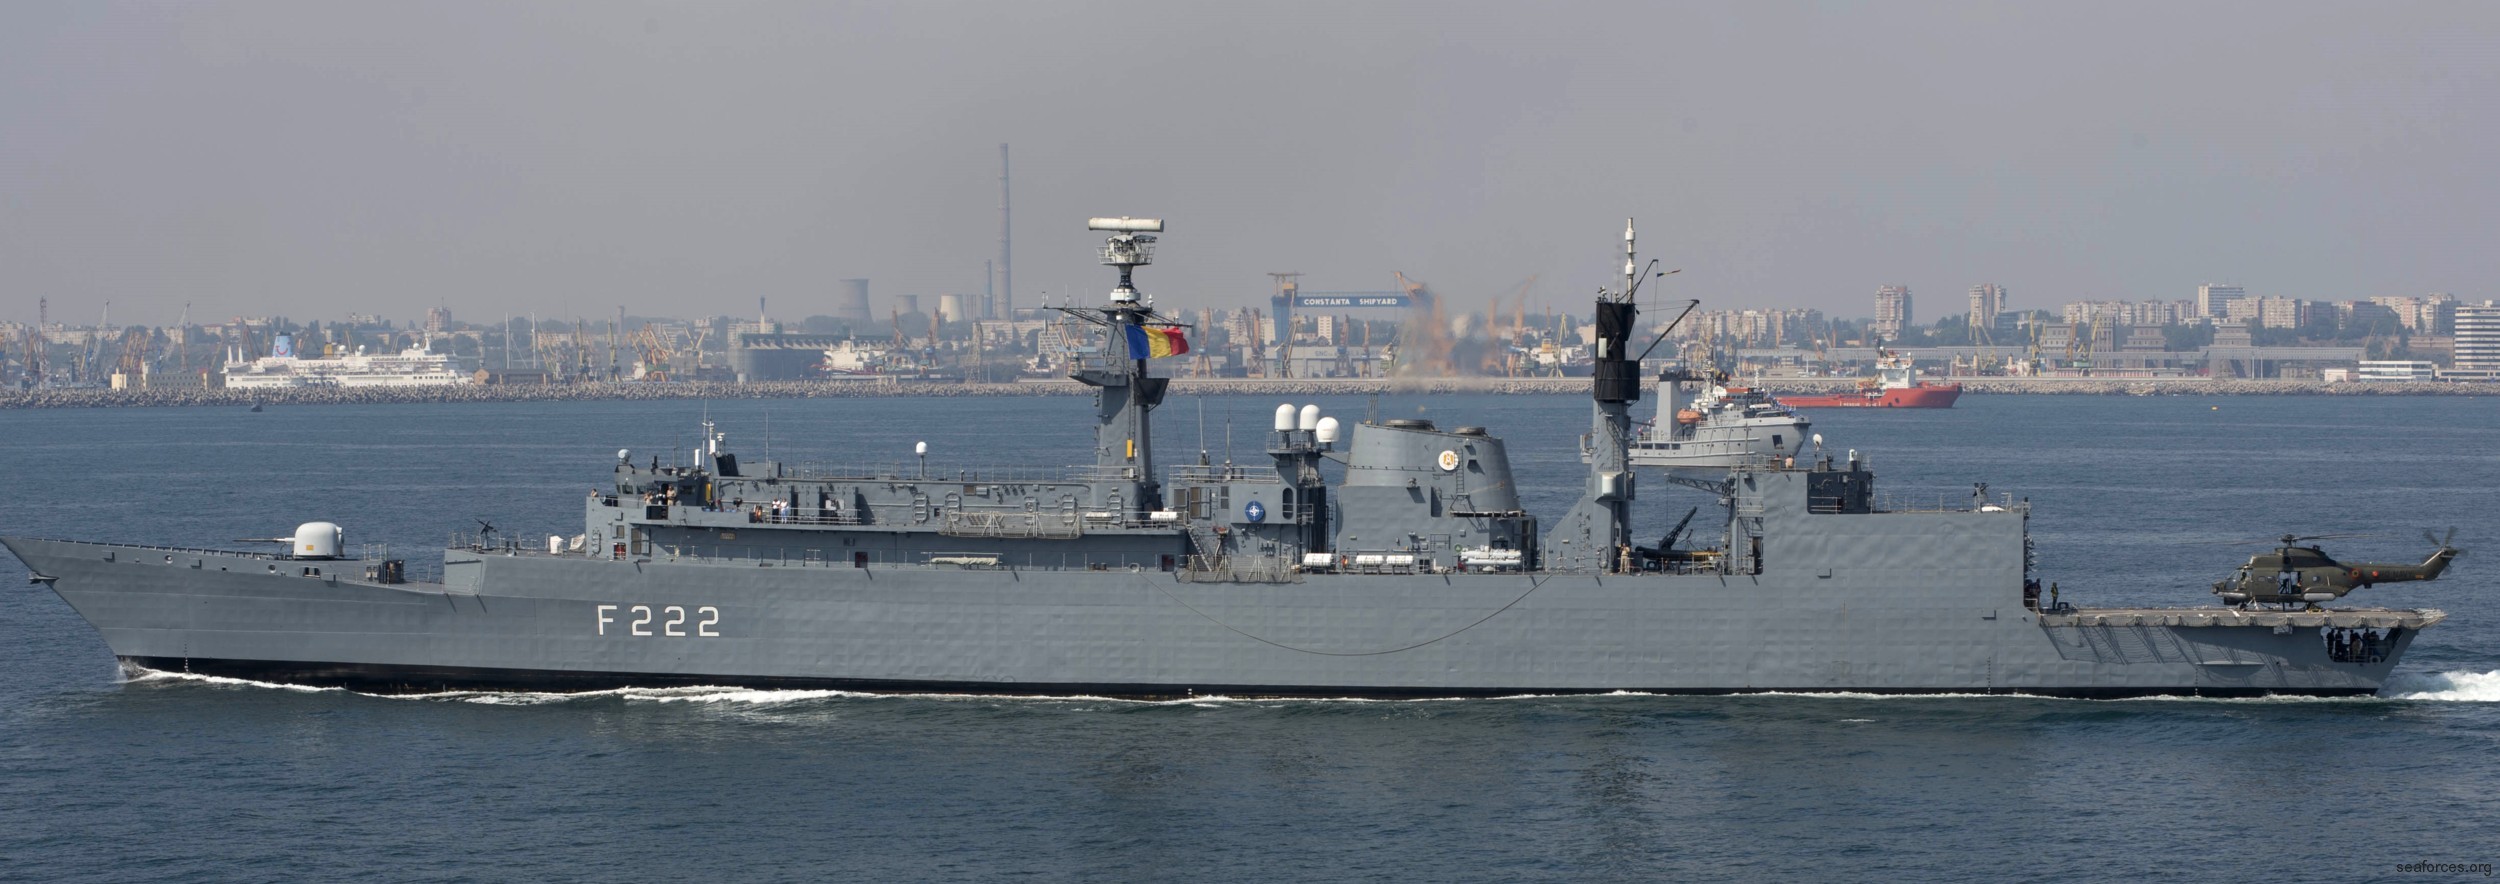 f222 regina maria romanian navy ex hms london f95 type 22 broadsword class frigate